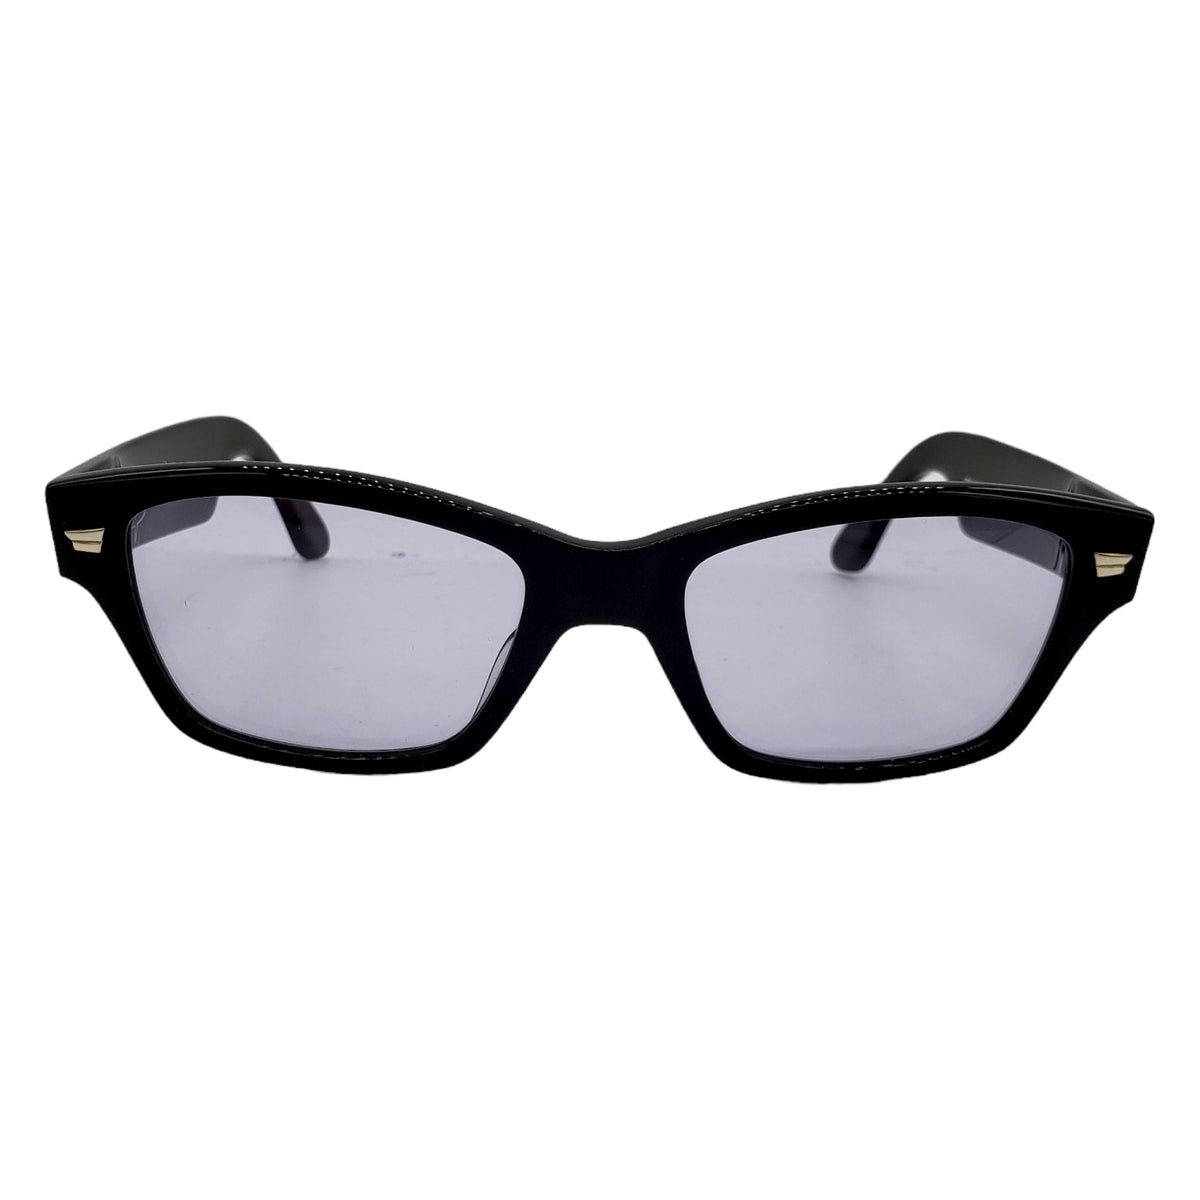 Garbstore X Solid Blue Black Sunglasses